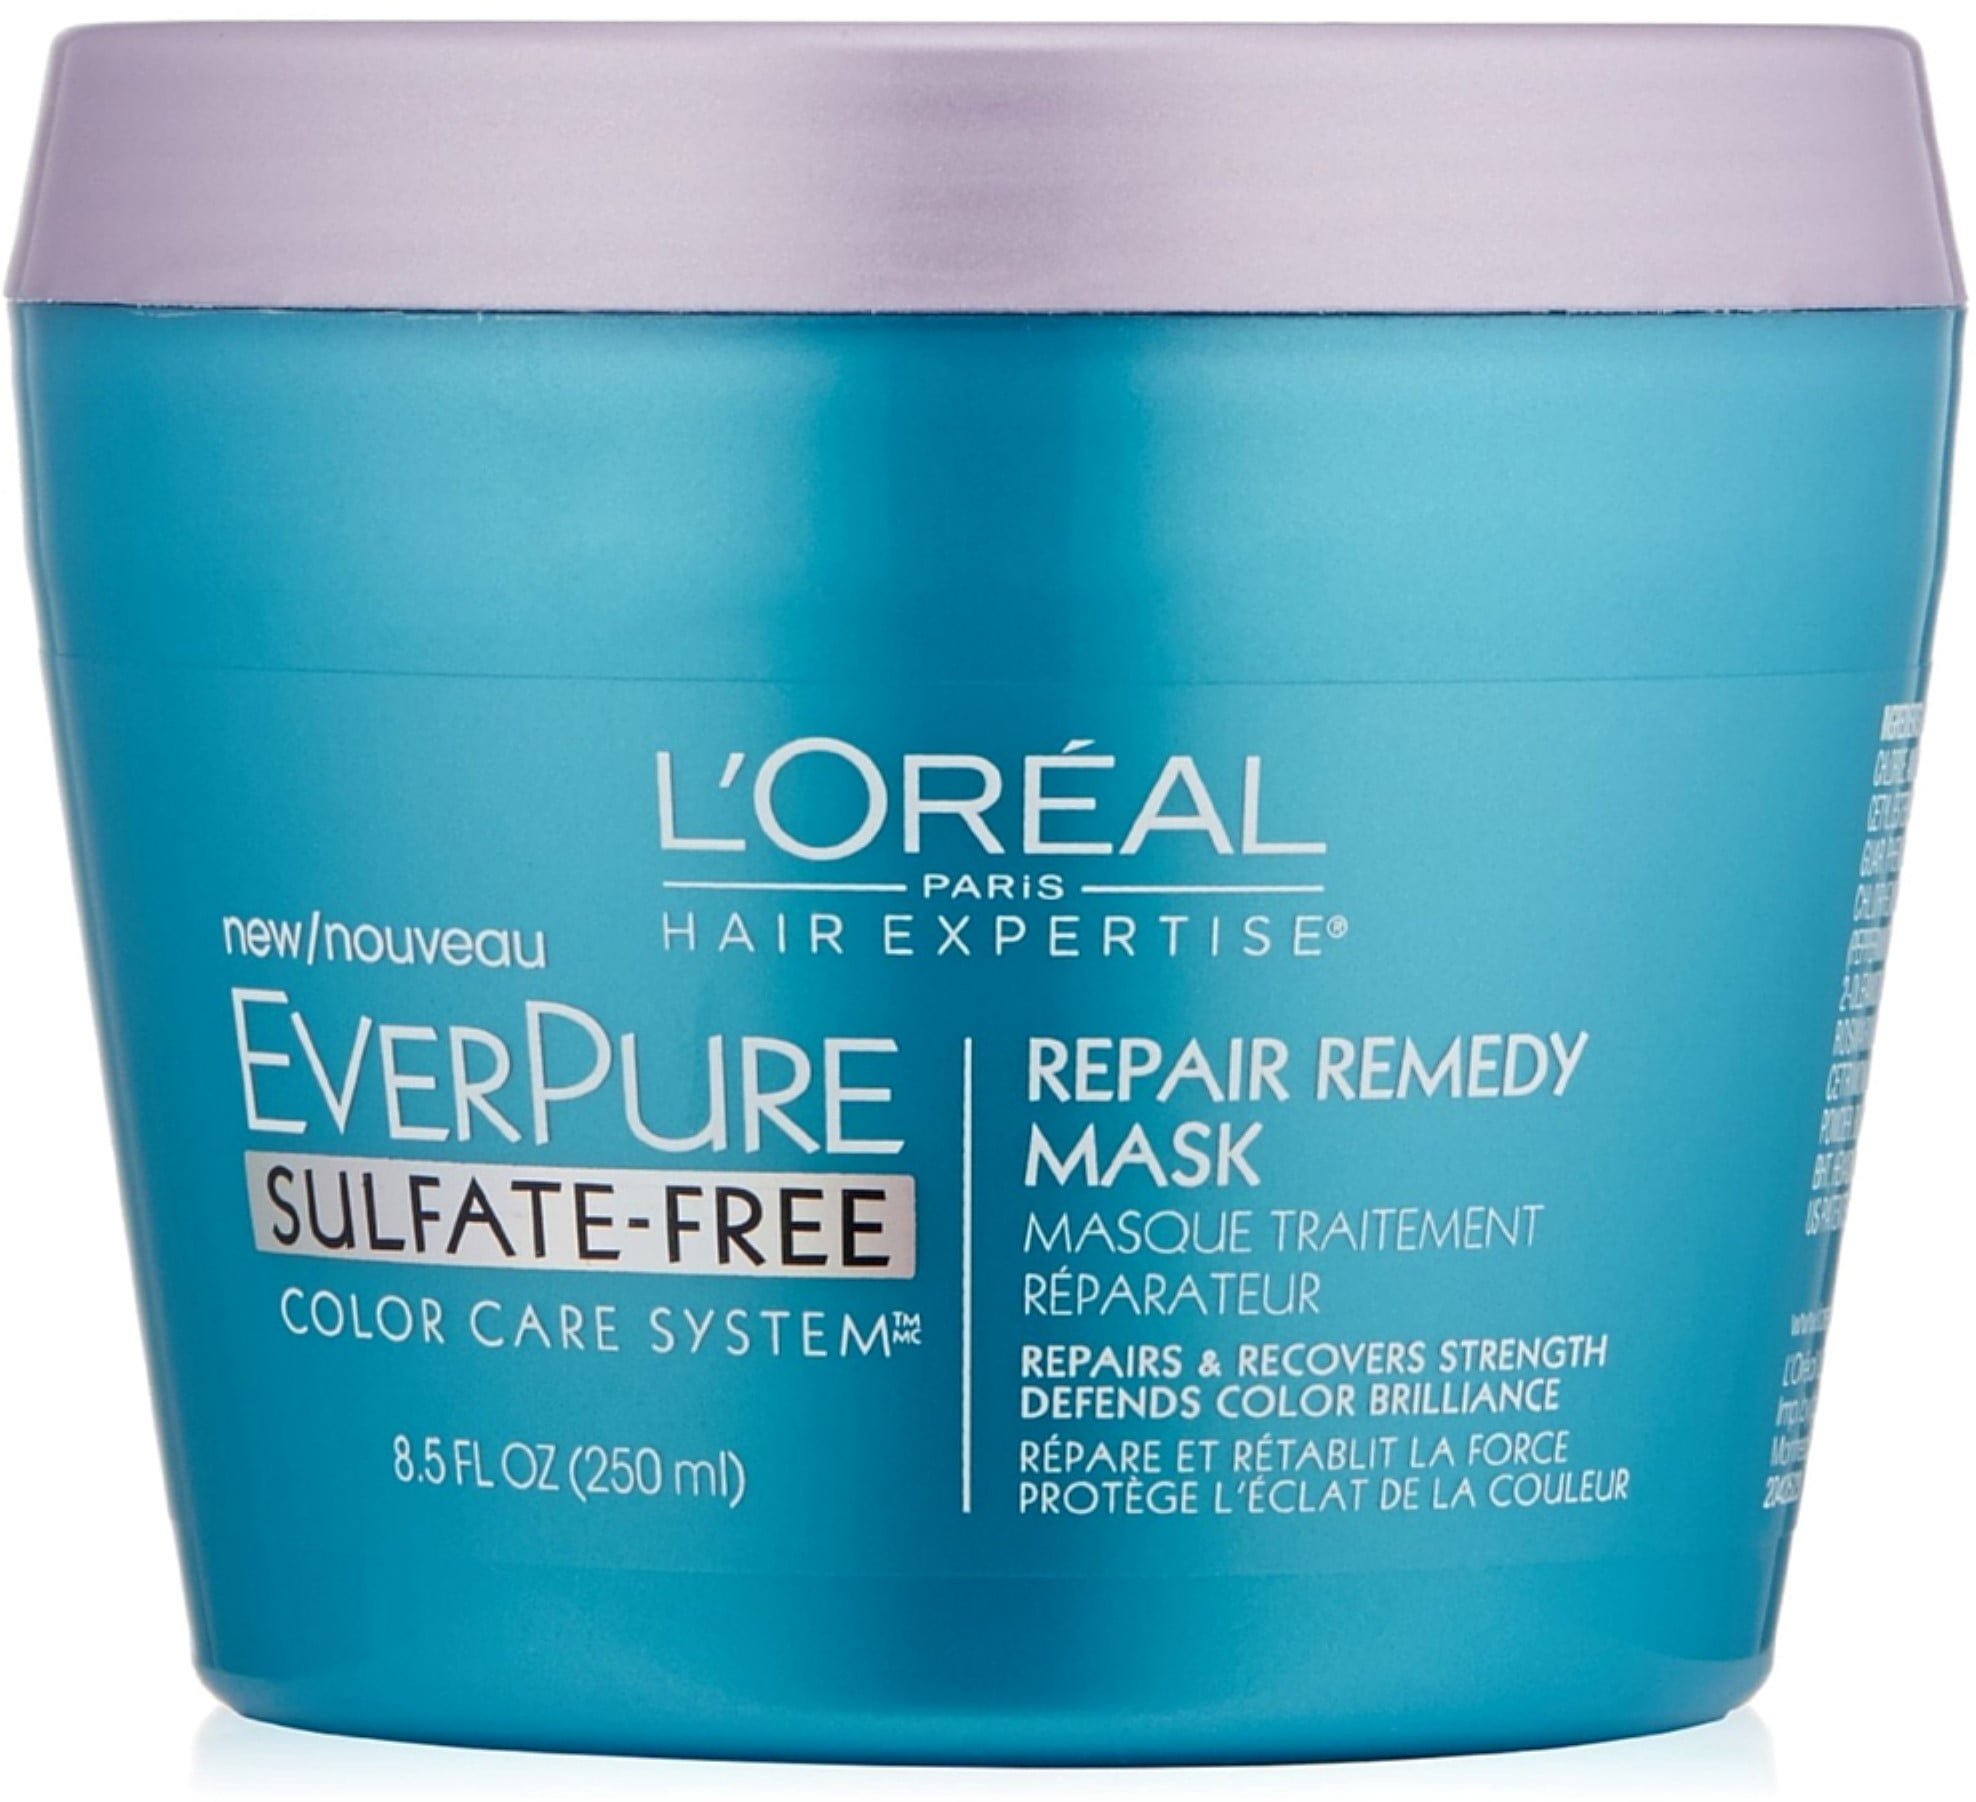 L'Oreal Paris Hair Expertise EverPure Repair Remedy Mask 8.5 oz